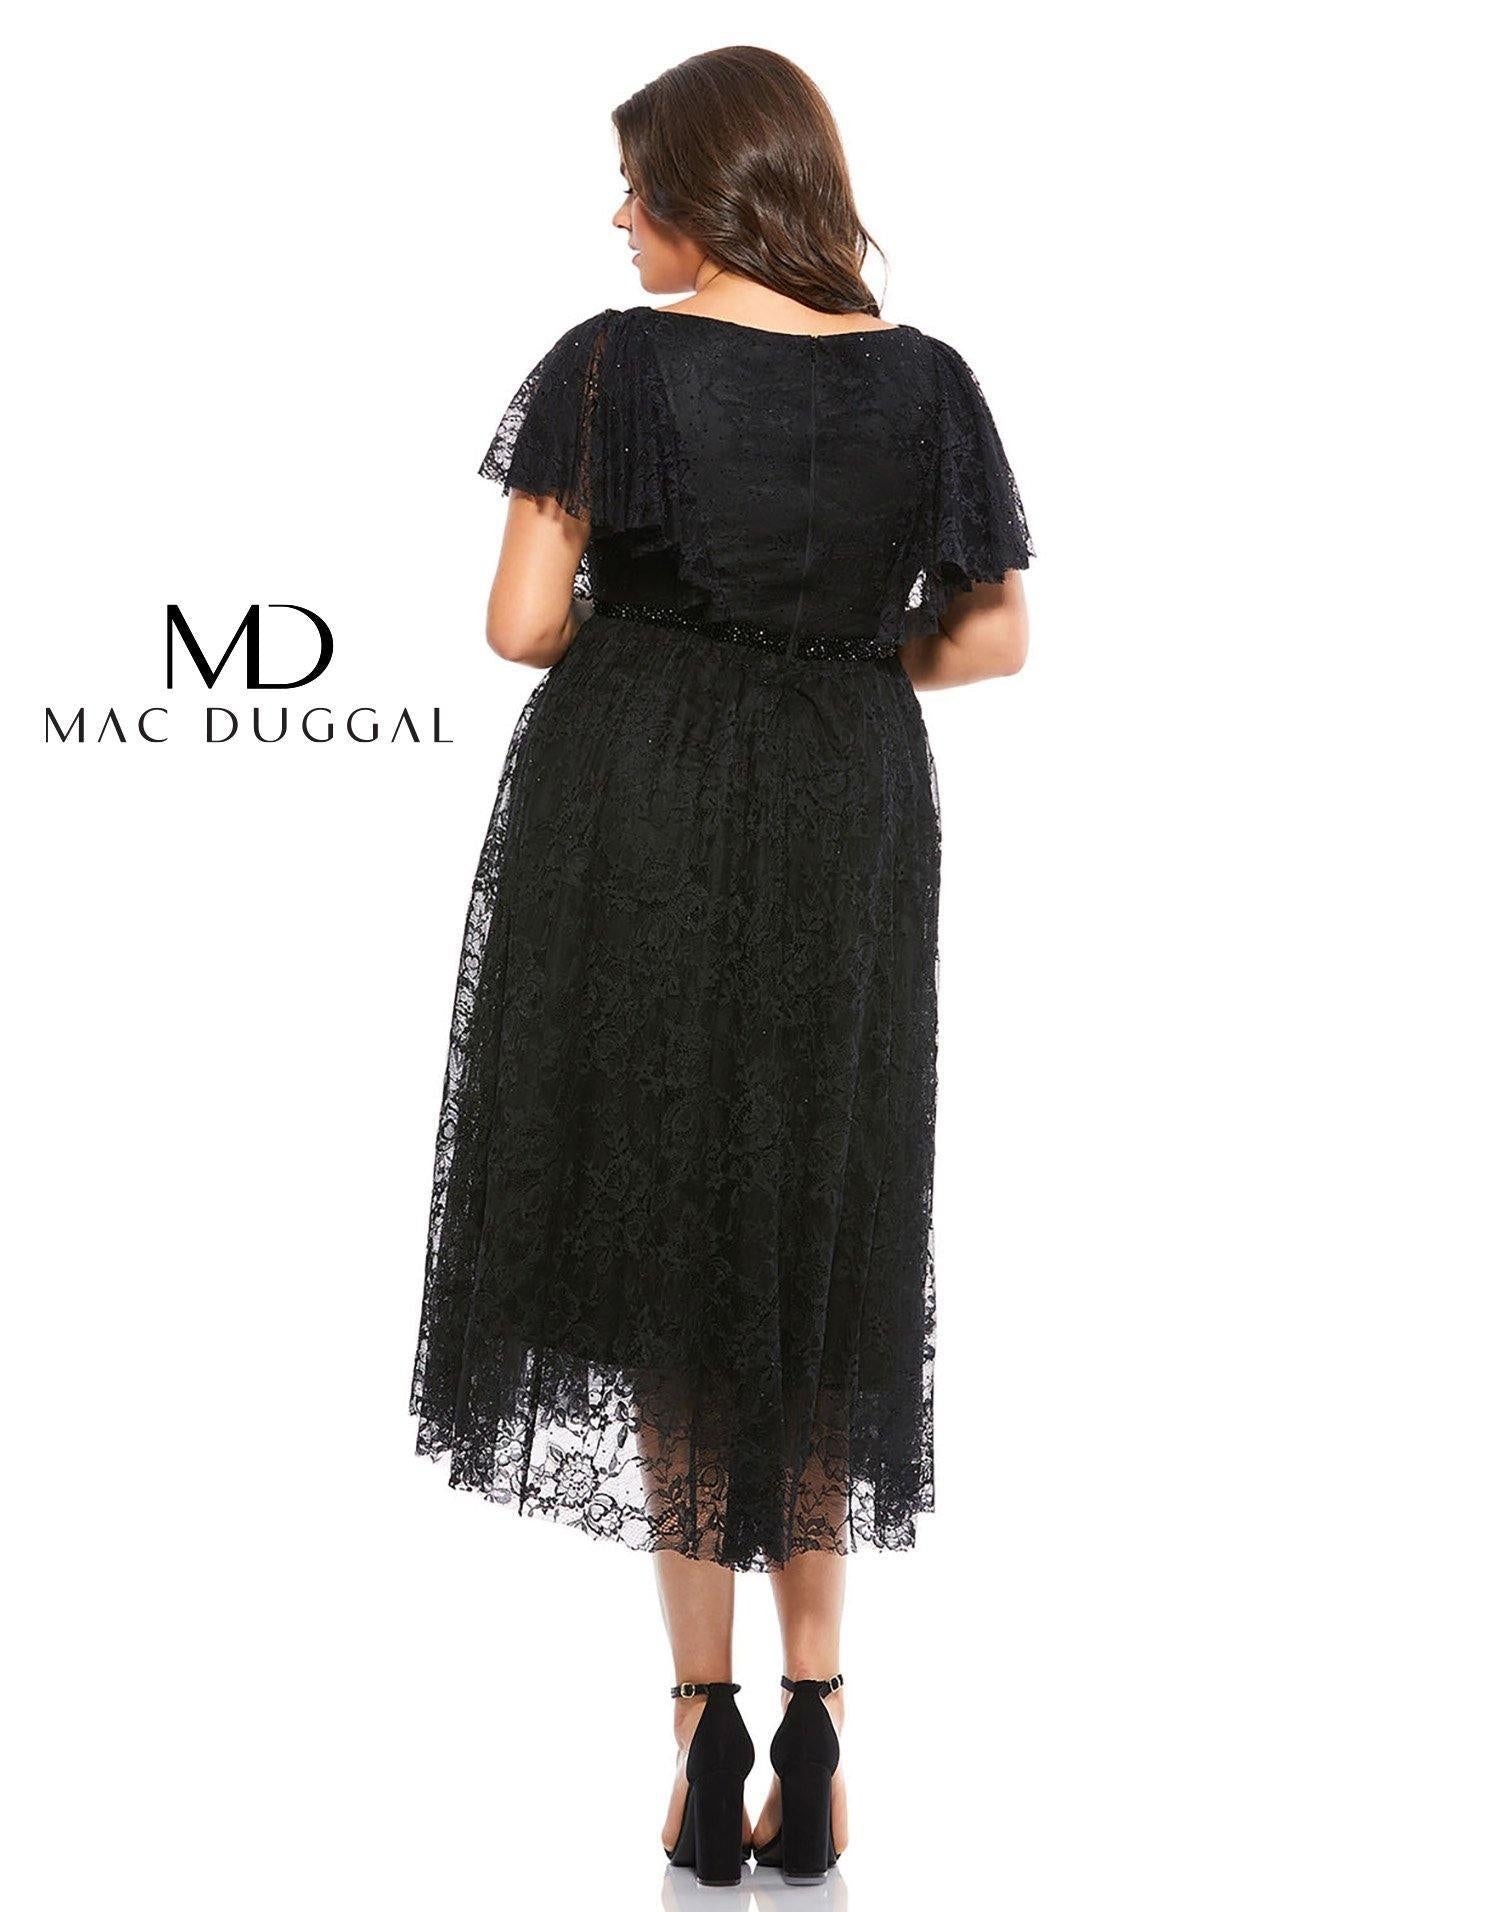 Mac Duggal Fabulouss Short Plus Size Dress 675421 - The Dress Outlet